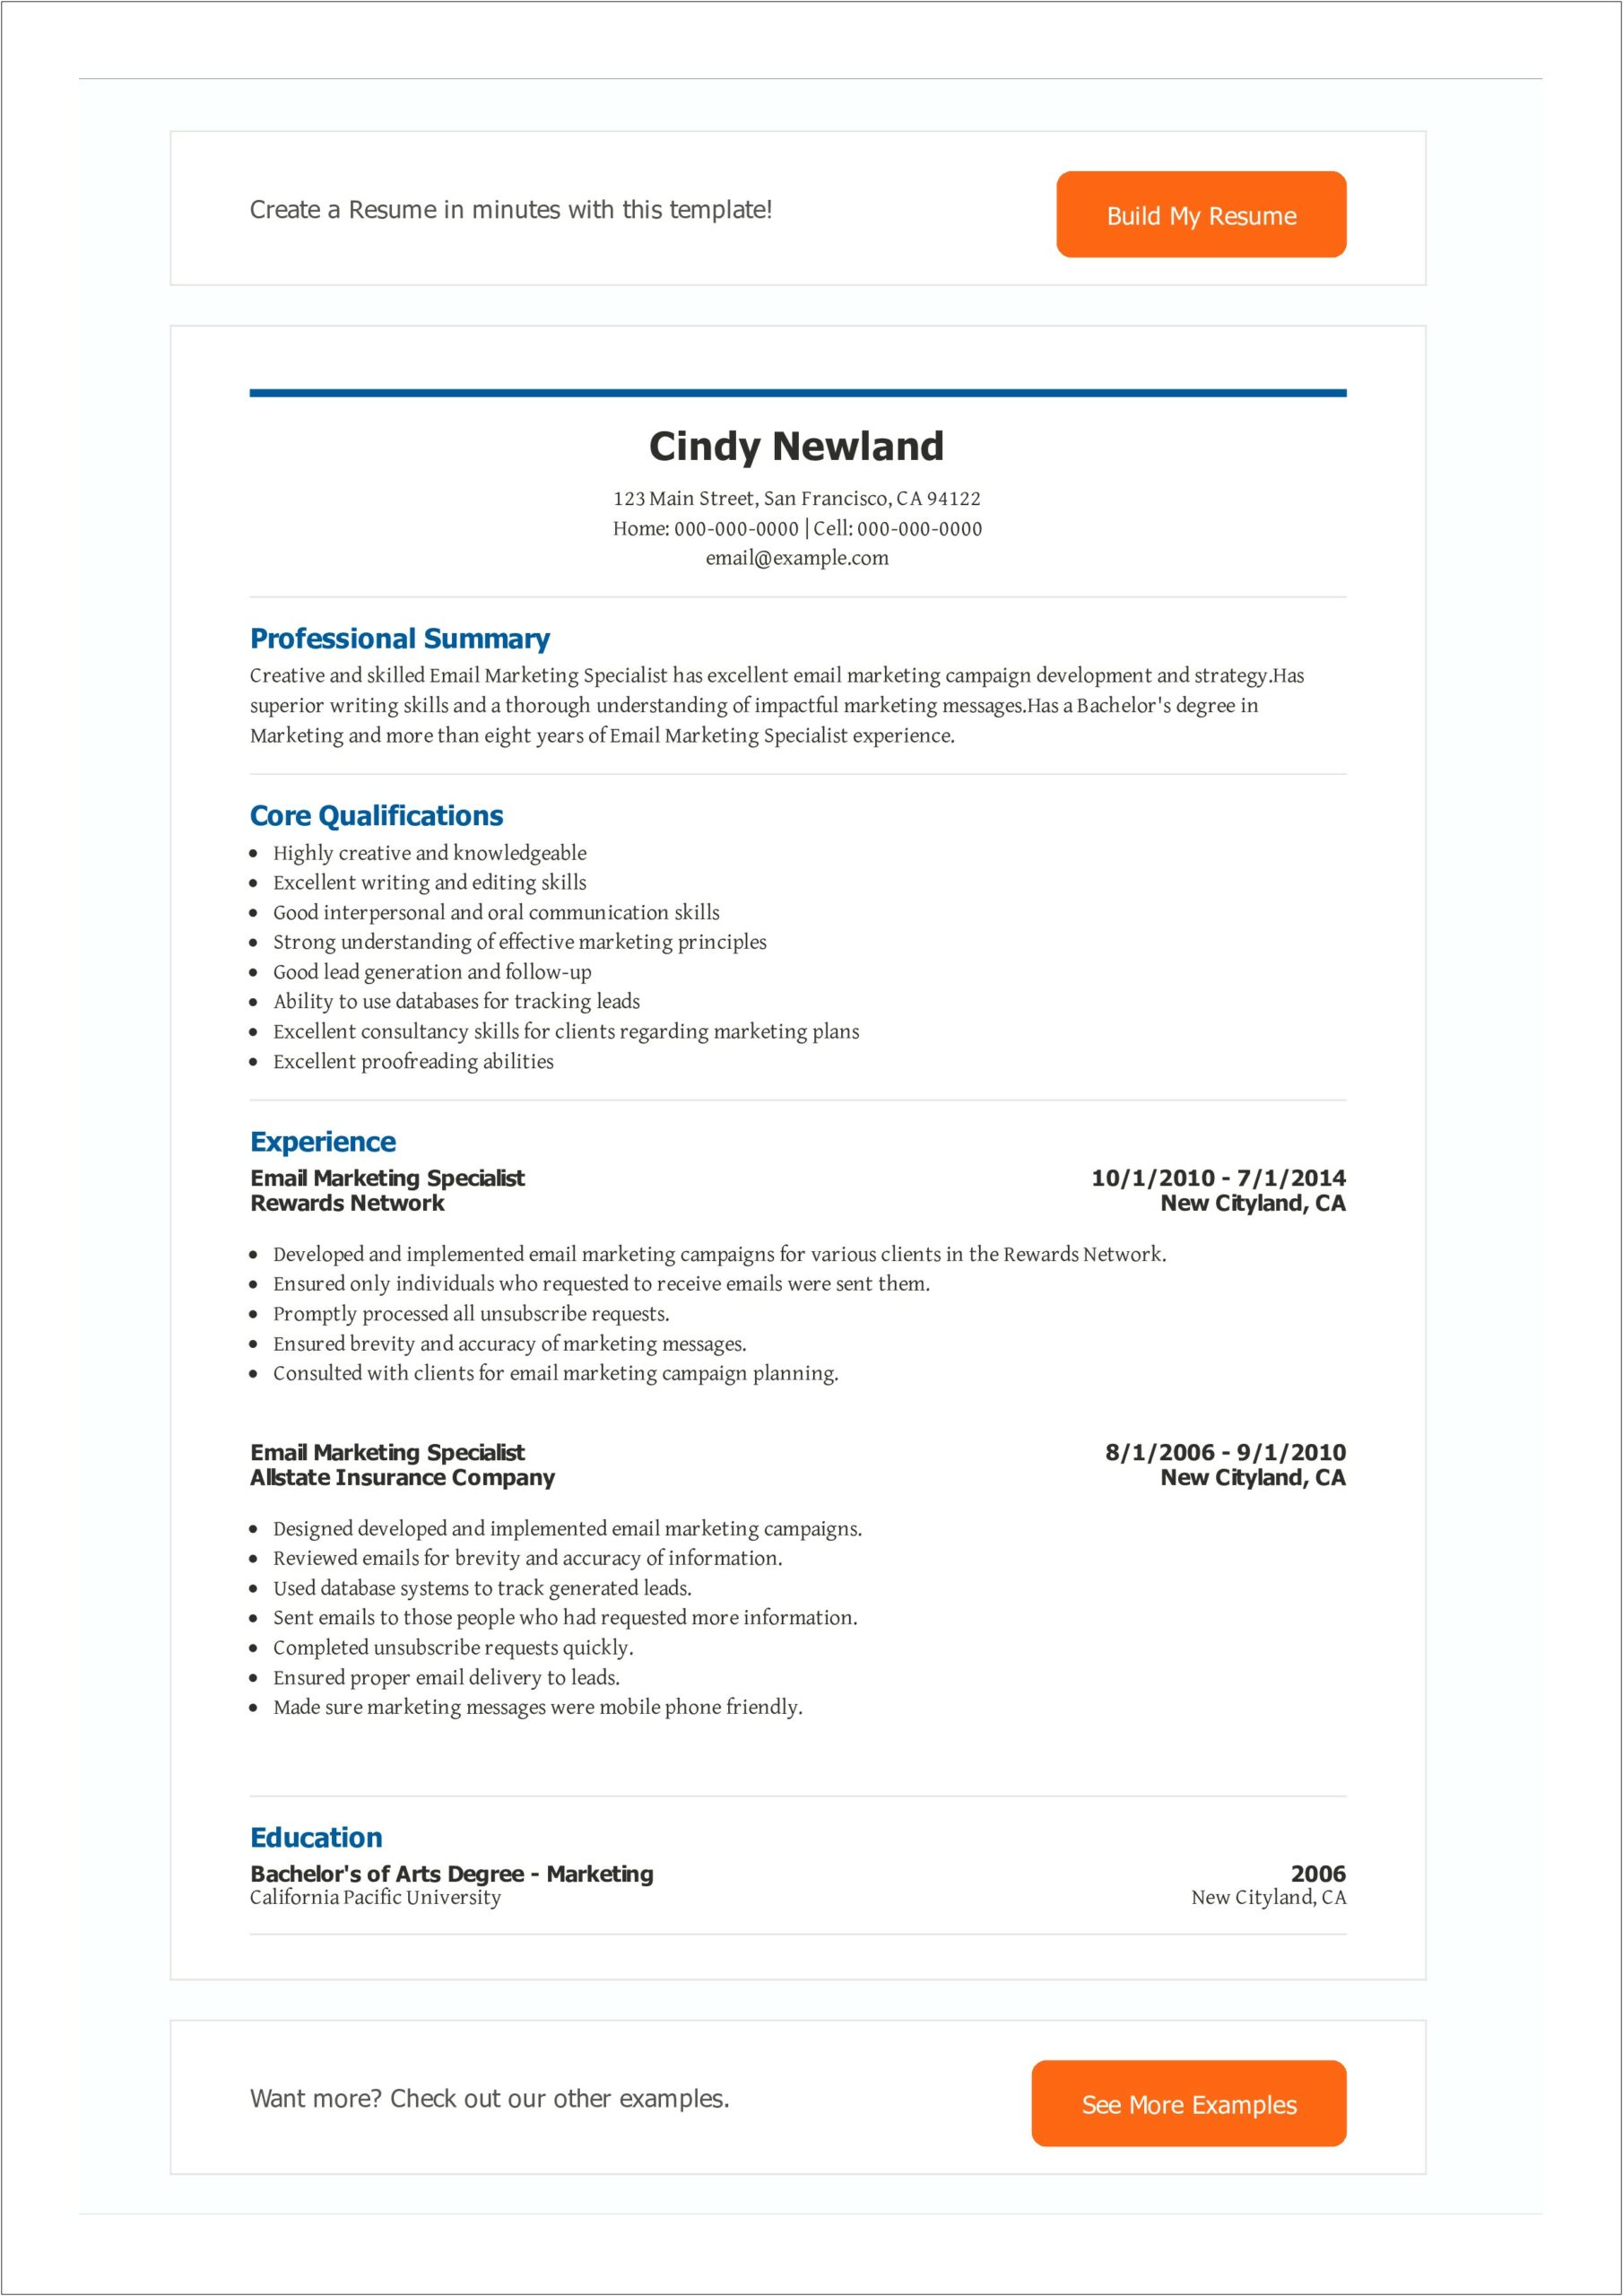 Sample Resume For Email Marketing